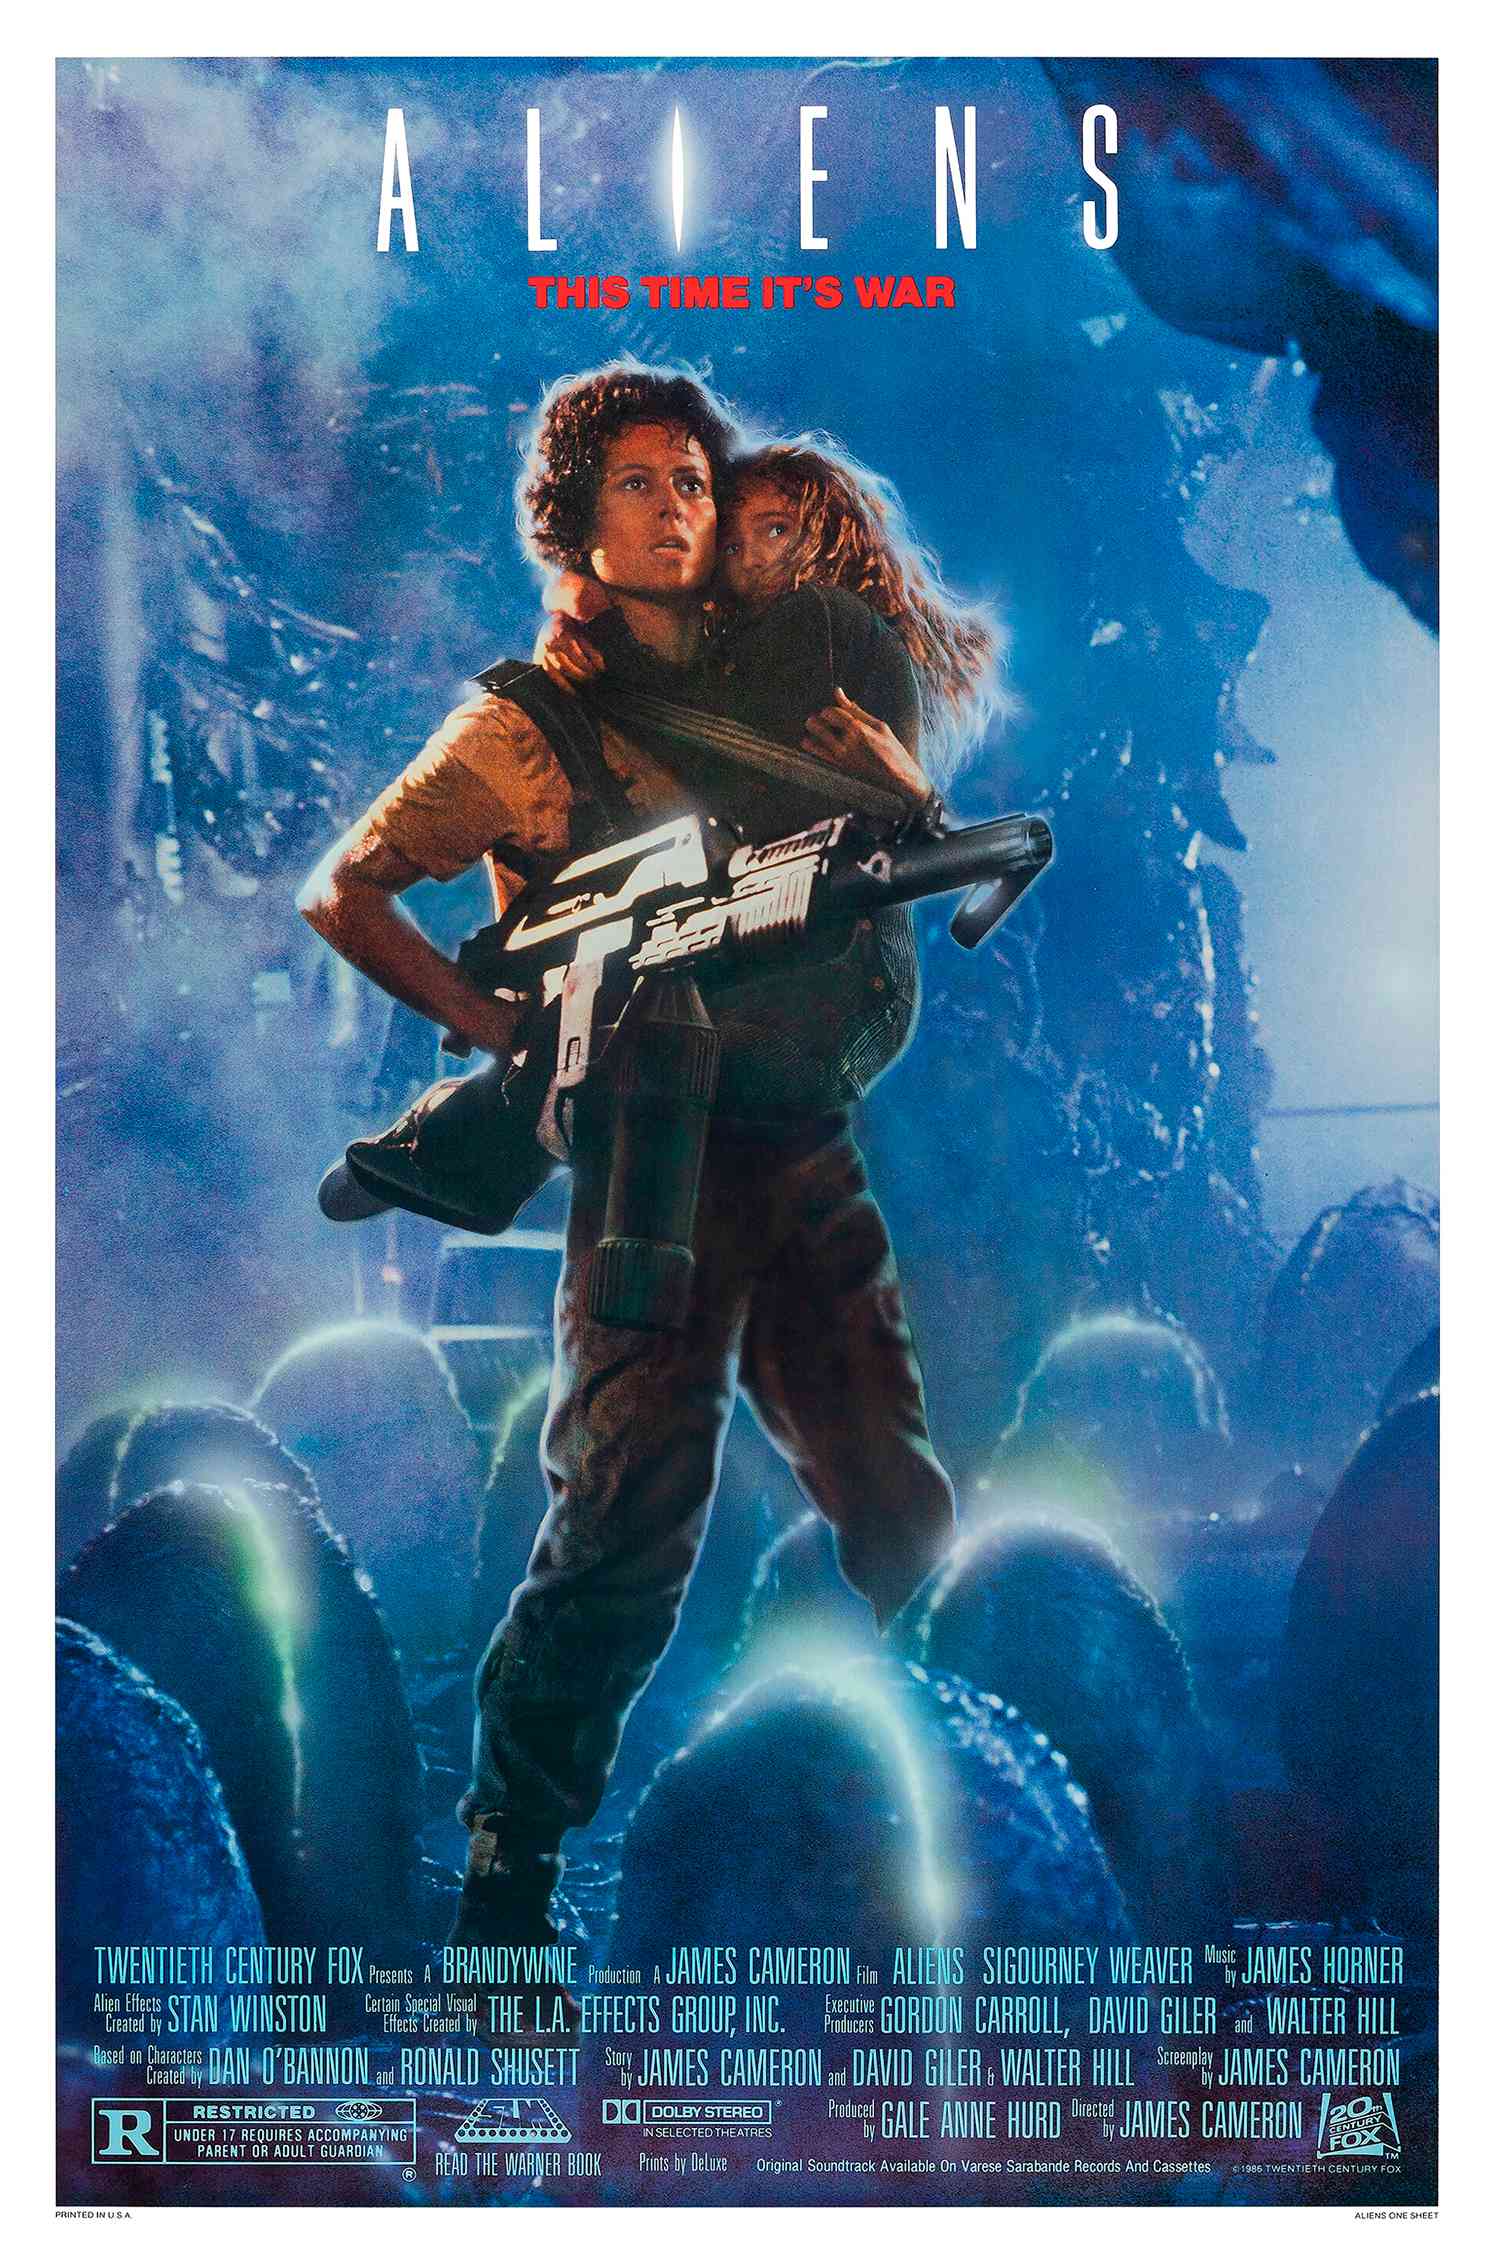 FULL MOVIE: Aliens (1986)